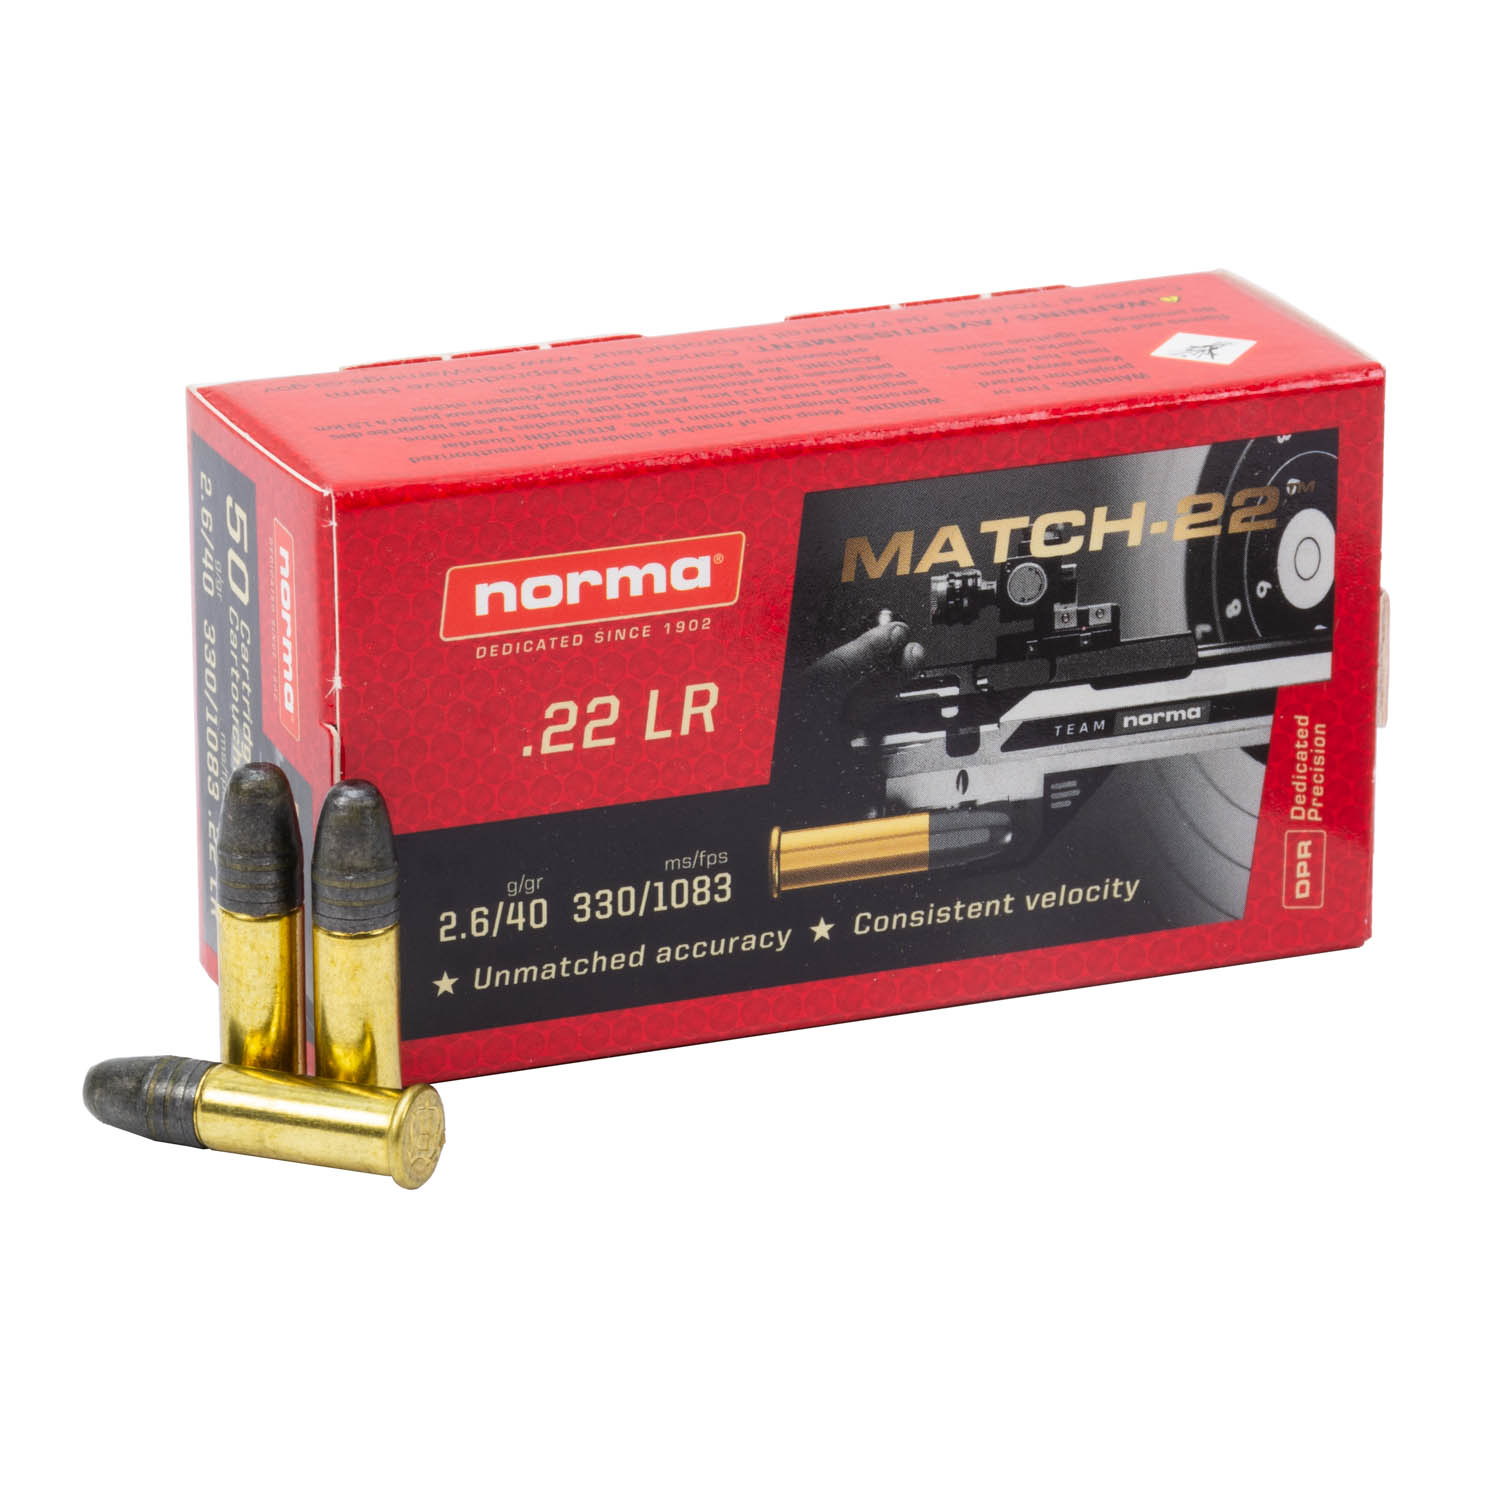 Norma Match 22LR 40gr. LRN Ammunition, 50 Round Box: MGW